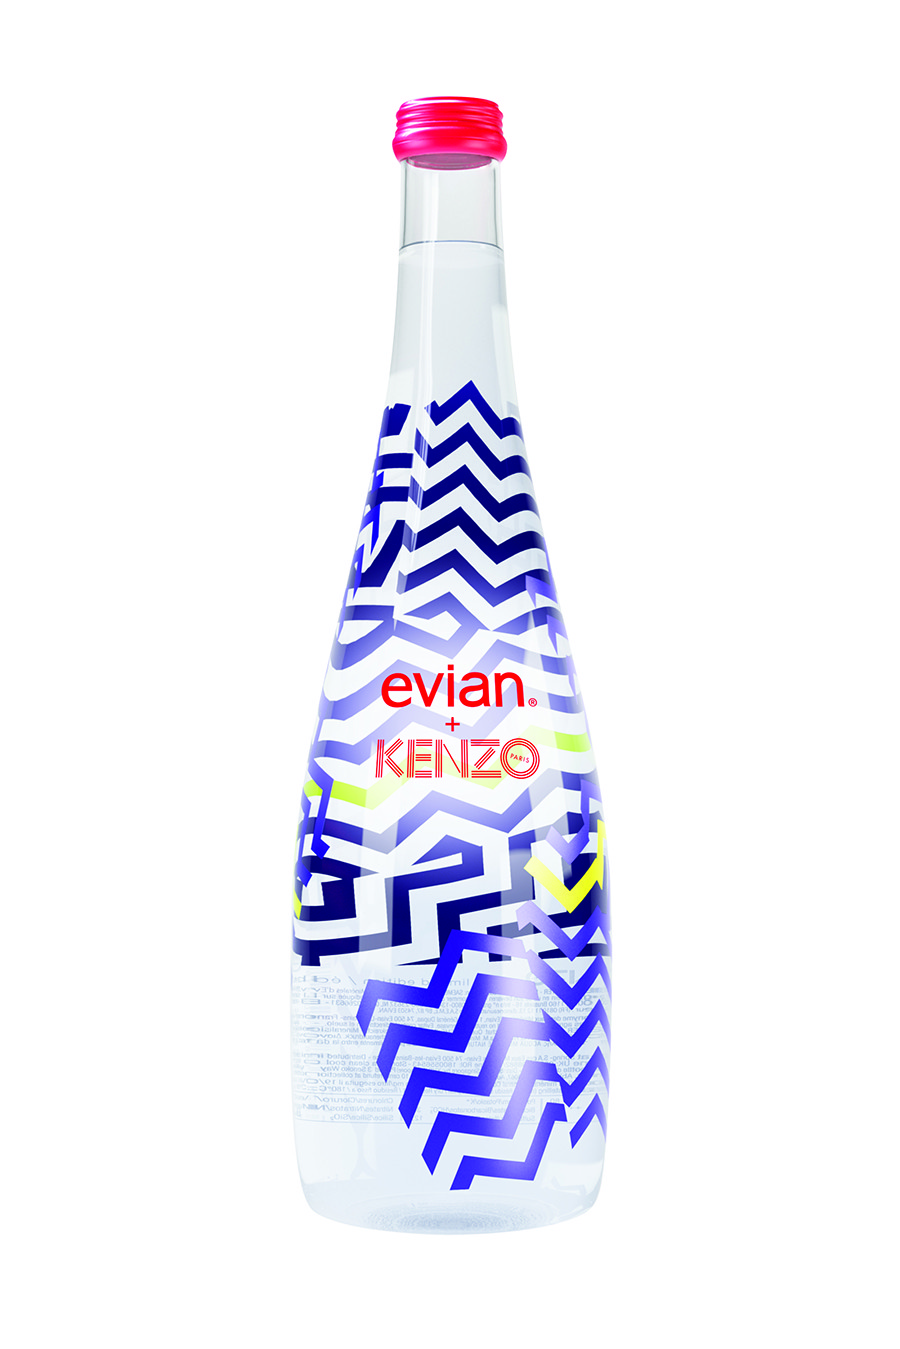 evianR與KENZO攜手合作，推出evianR x KENZO 2015限量版紀念瓶，以“玩心未泯”主題詮釋共同品牌精神。